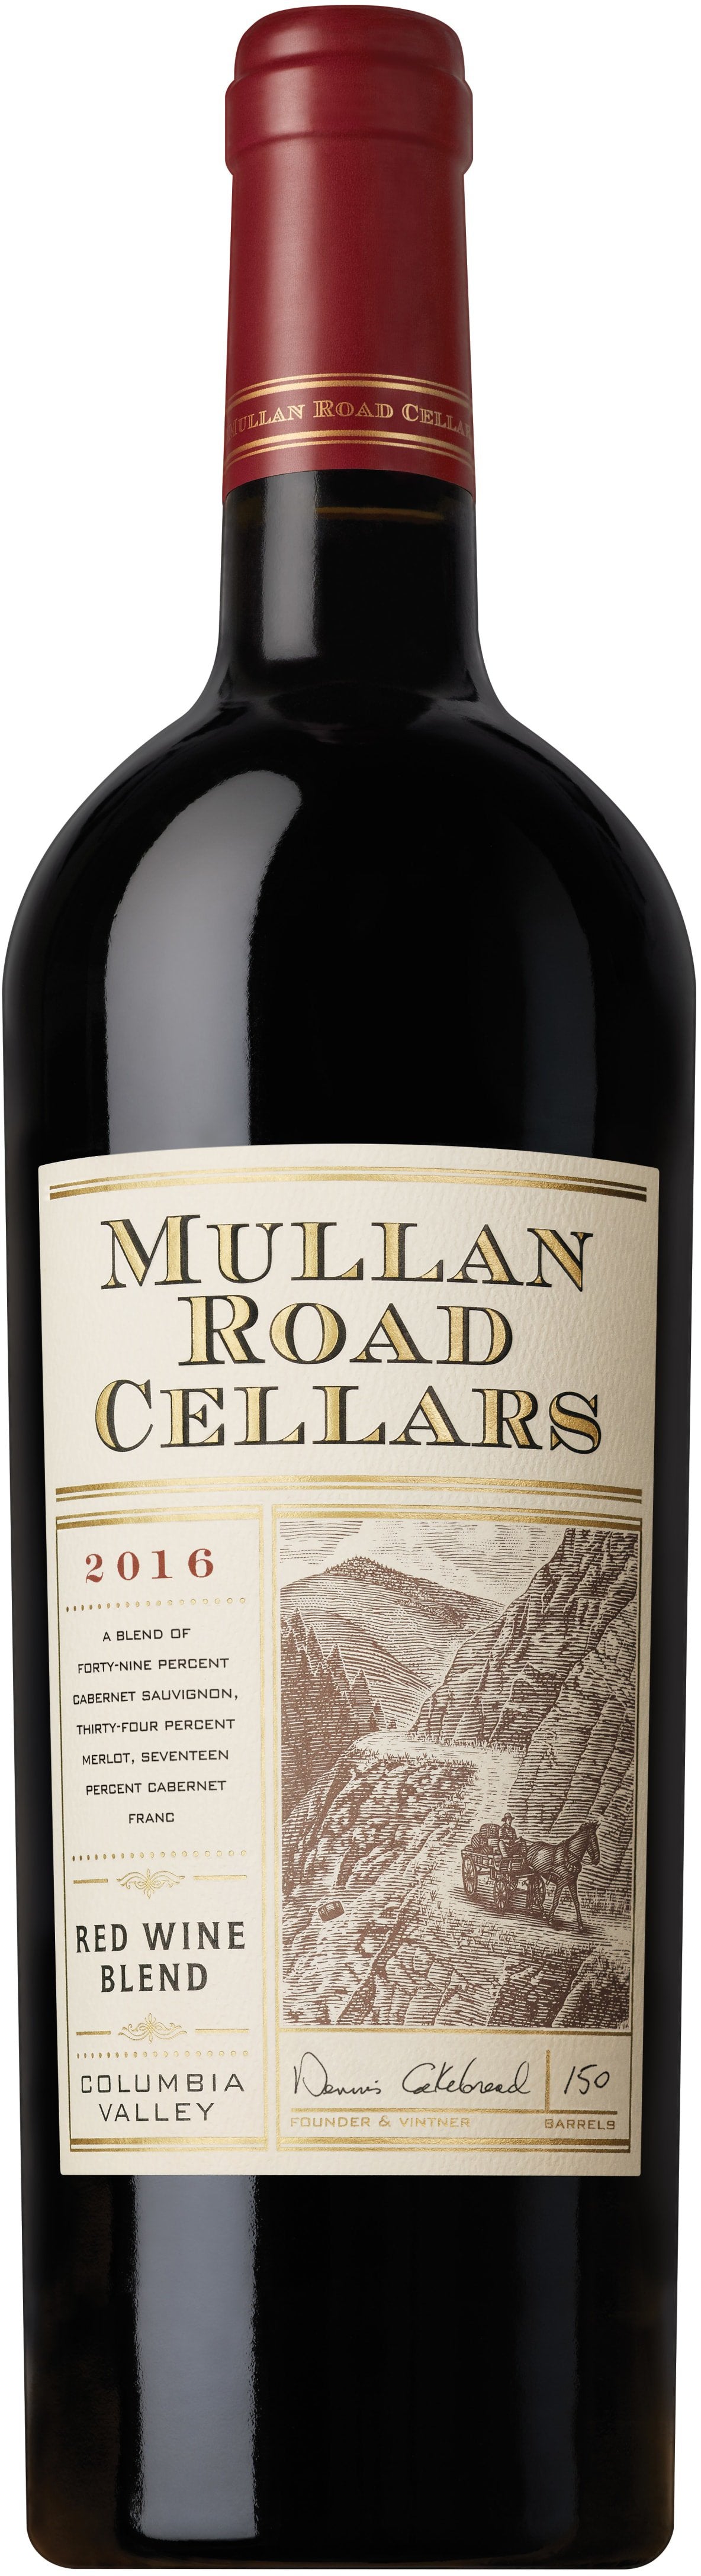 Mullan Road Cellars Red Wine Blend 2016